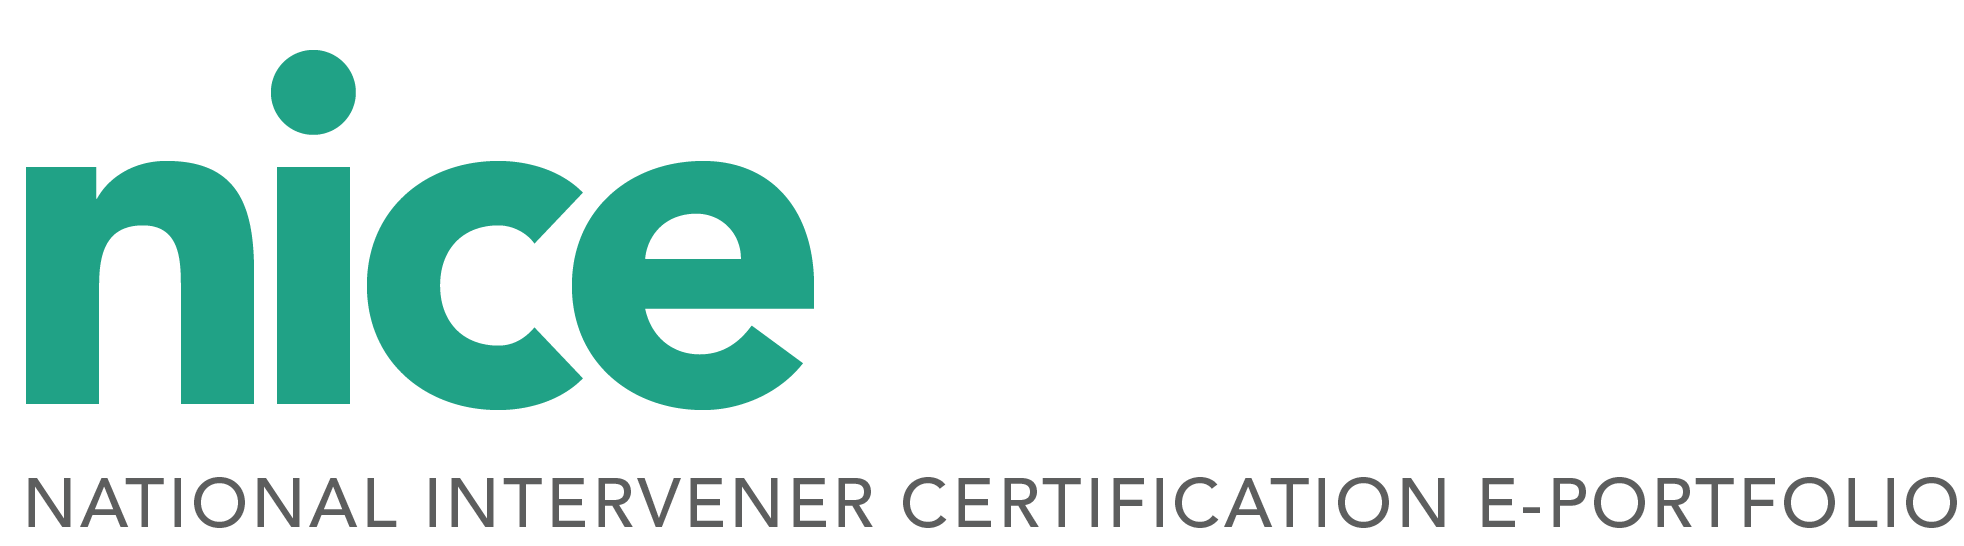 National Intervener Certification E-portfolio logo